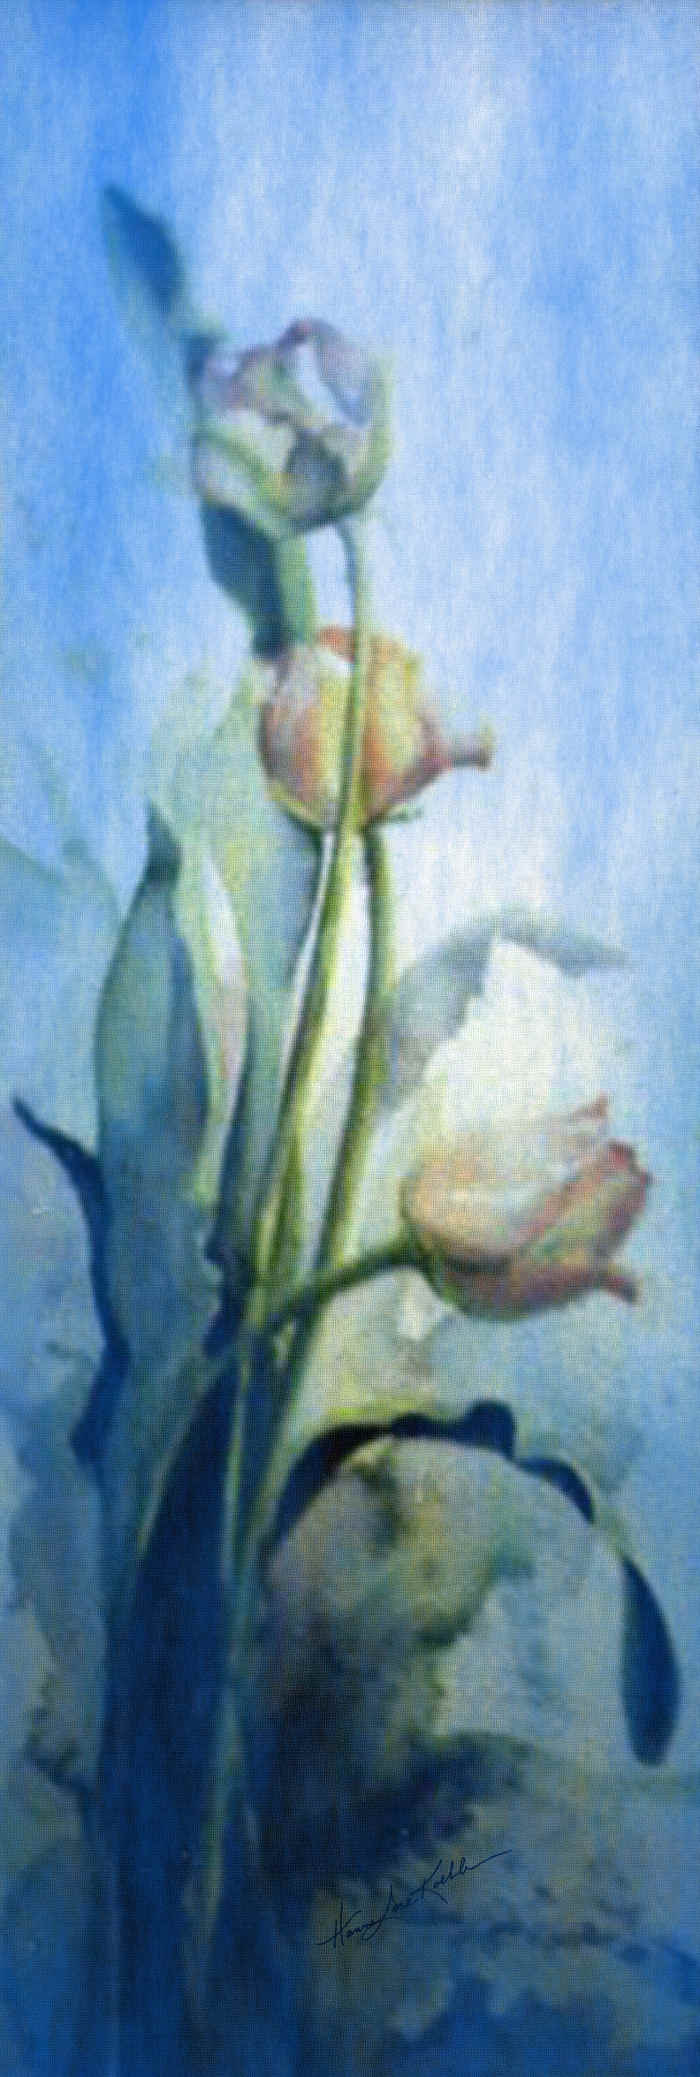 Tulips Painting